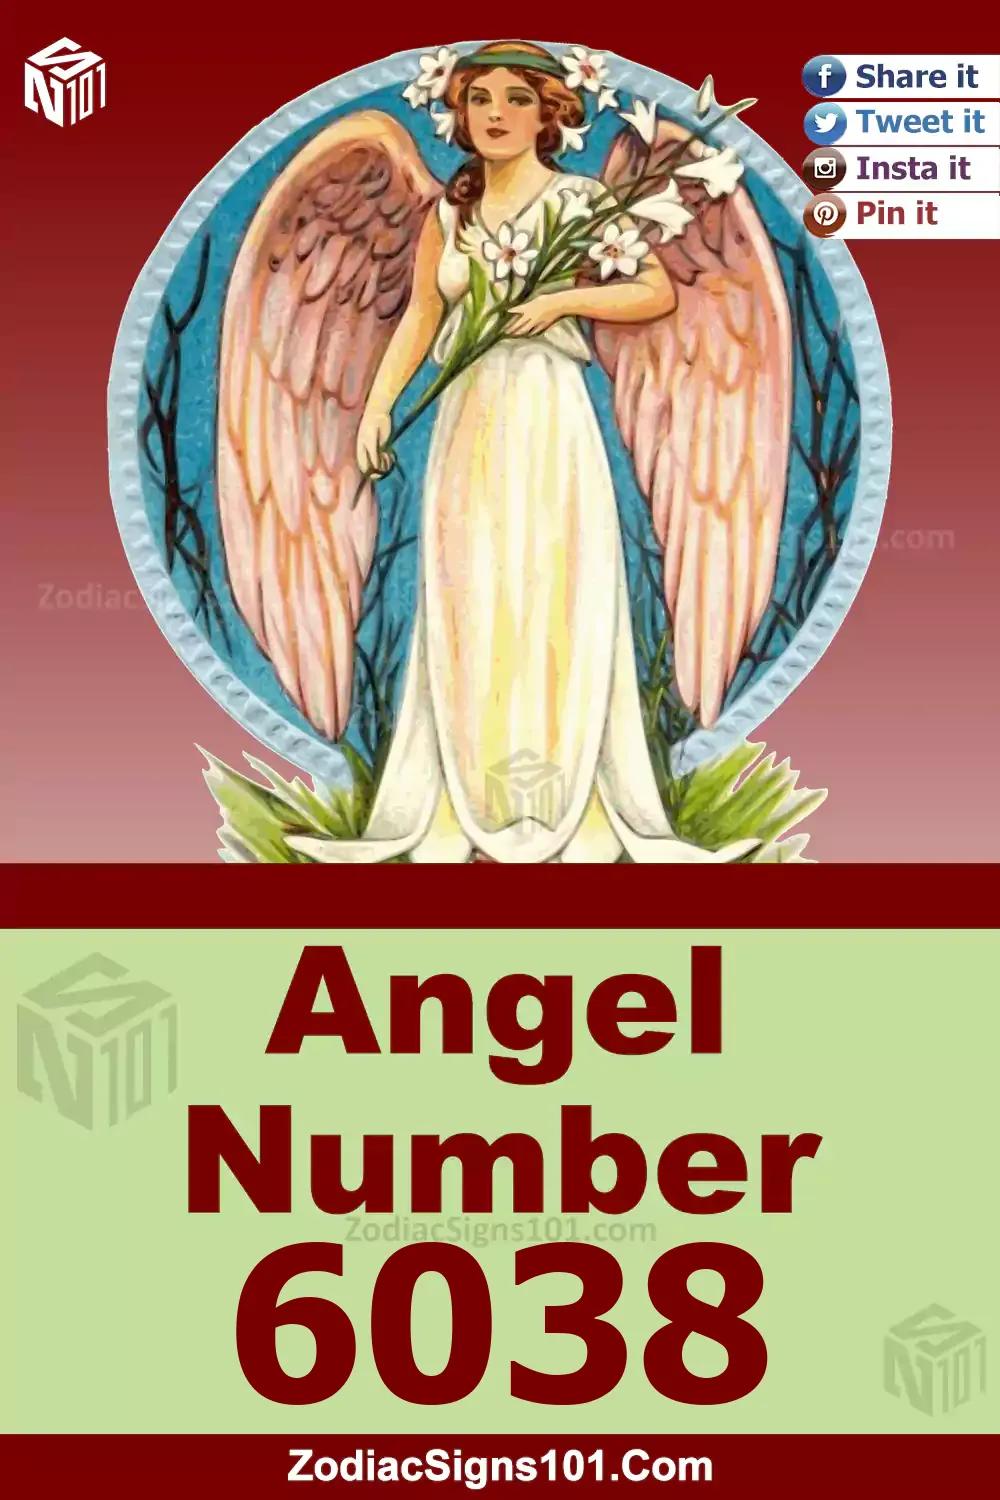 6038-Angel-Number-Meaning.jpg